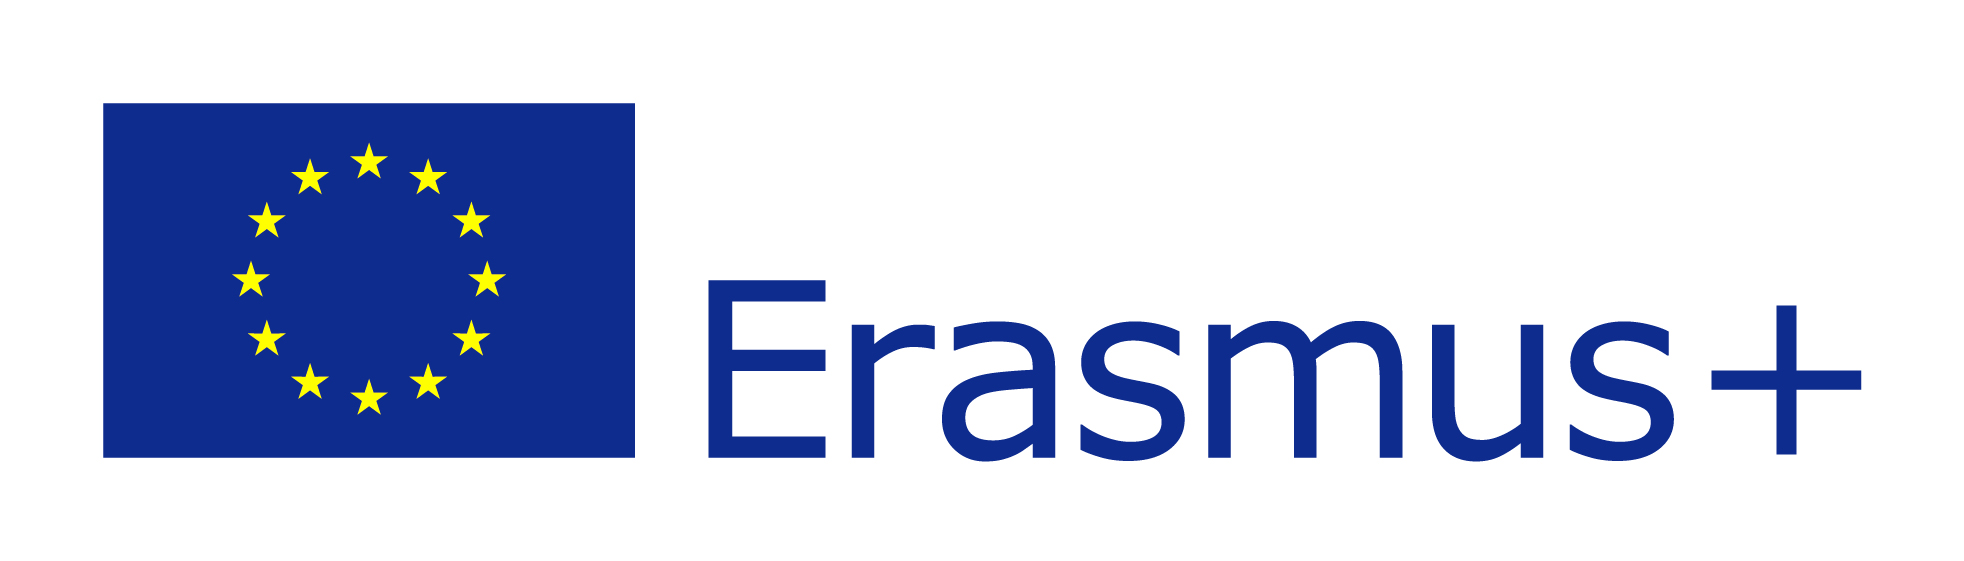 EU+flag-Erasmus+_vect_POS